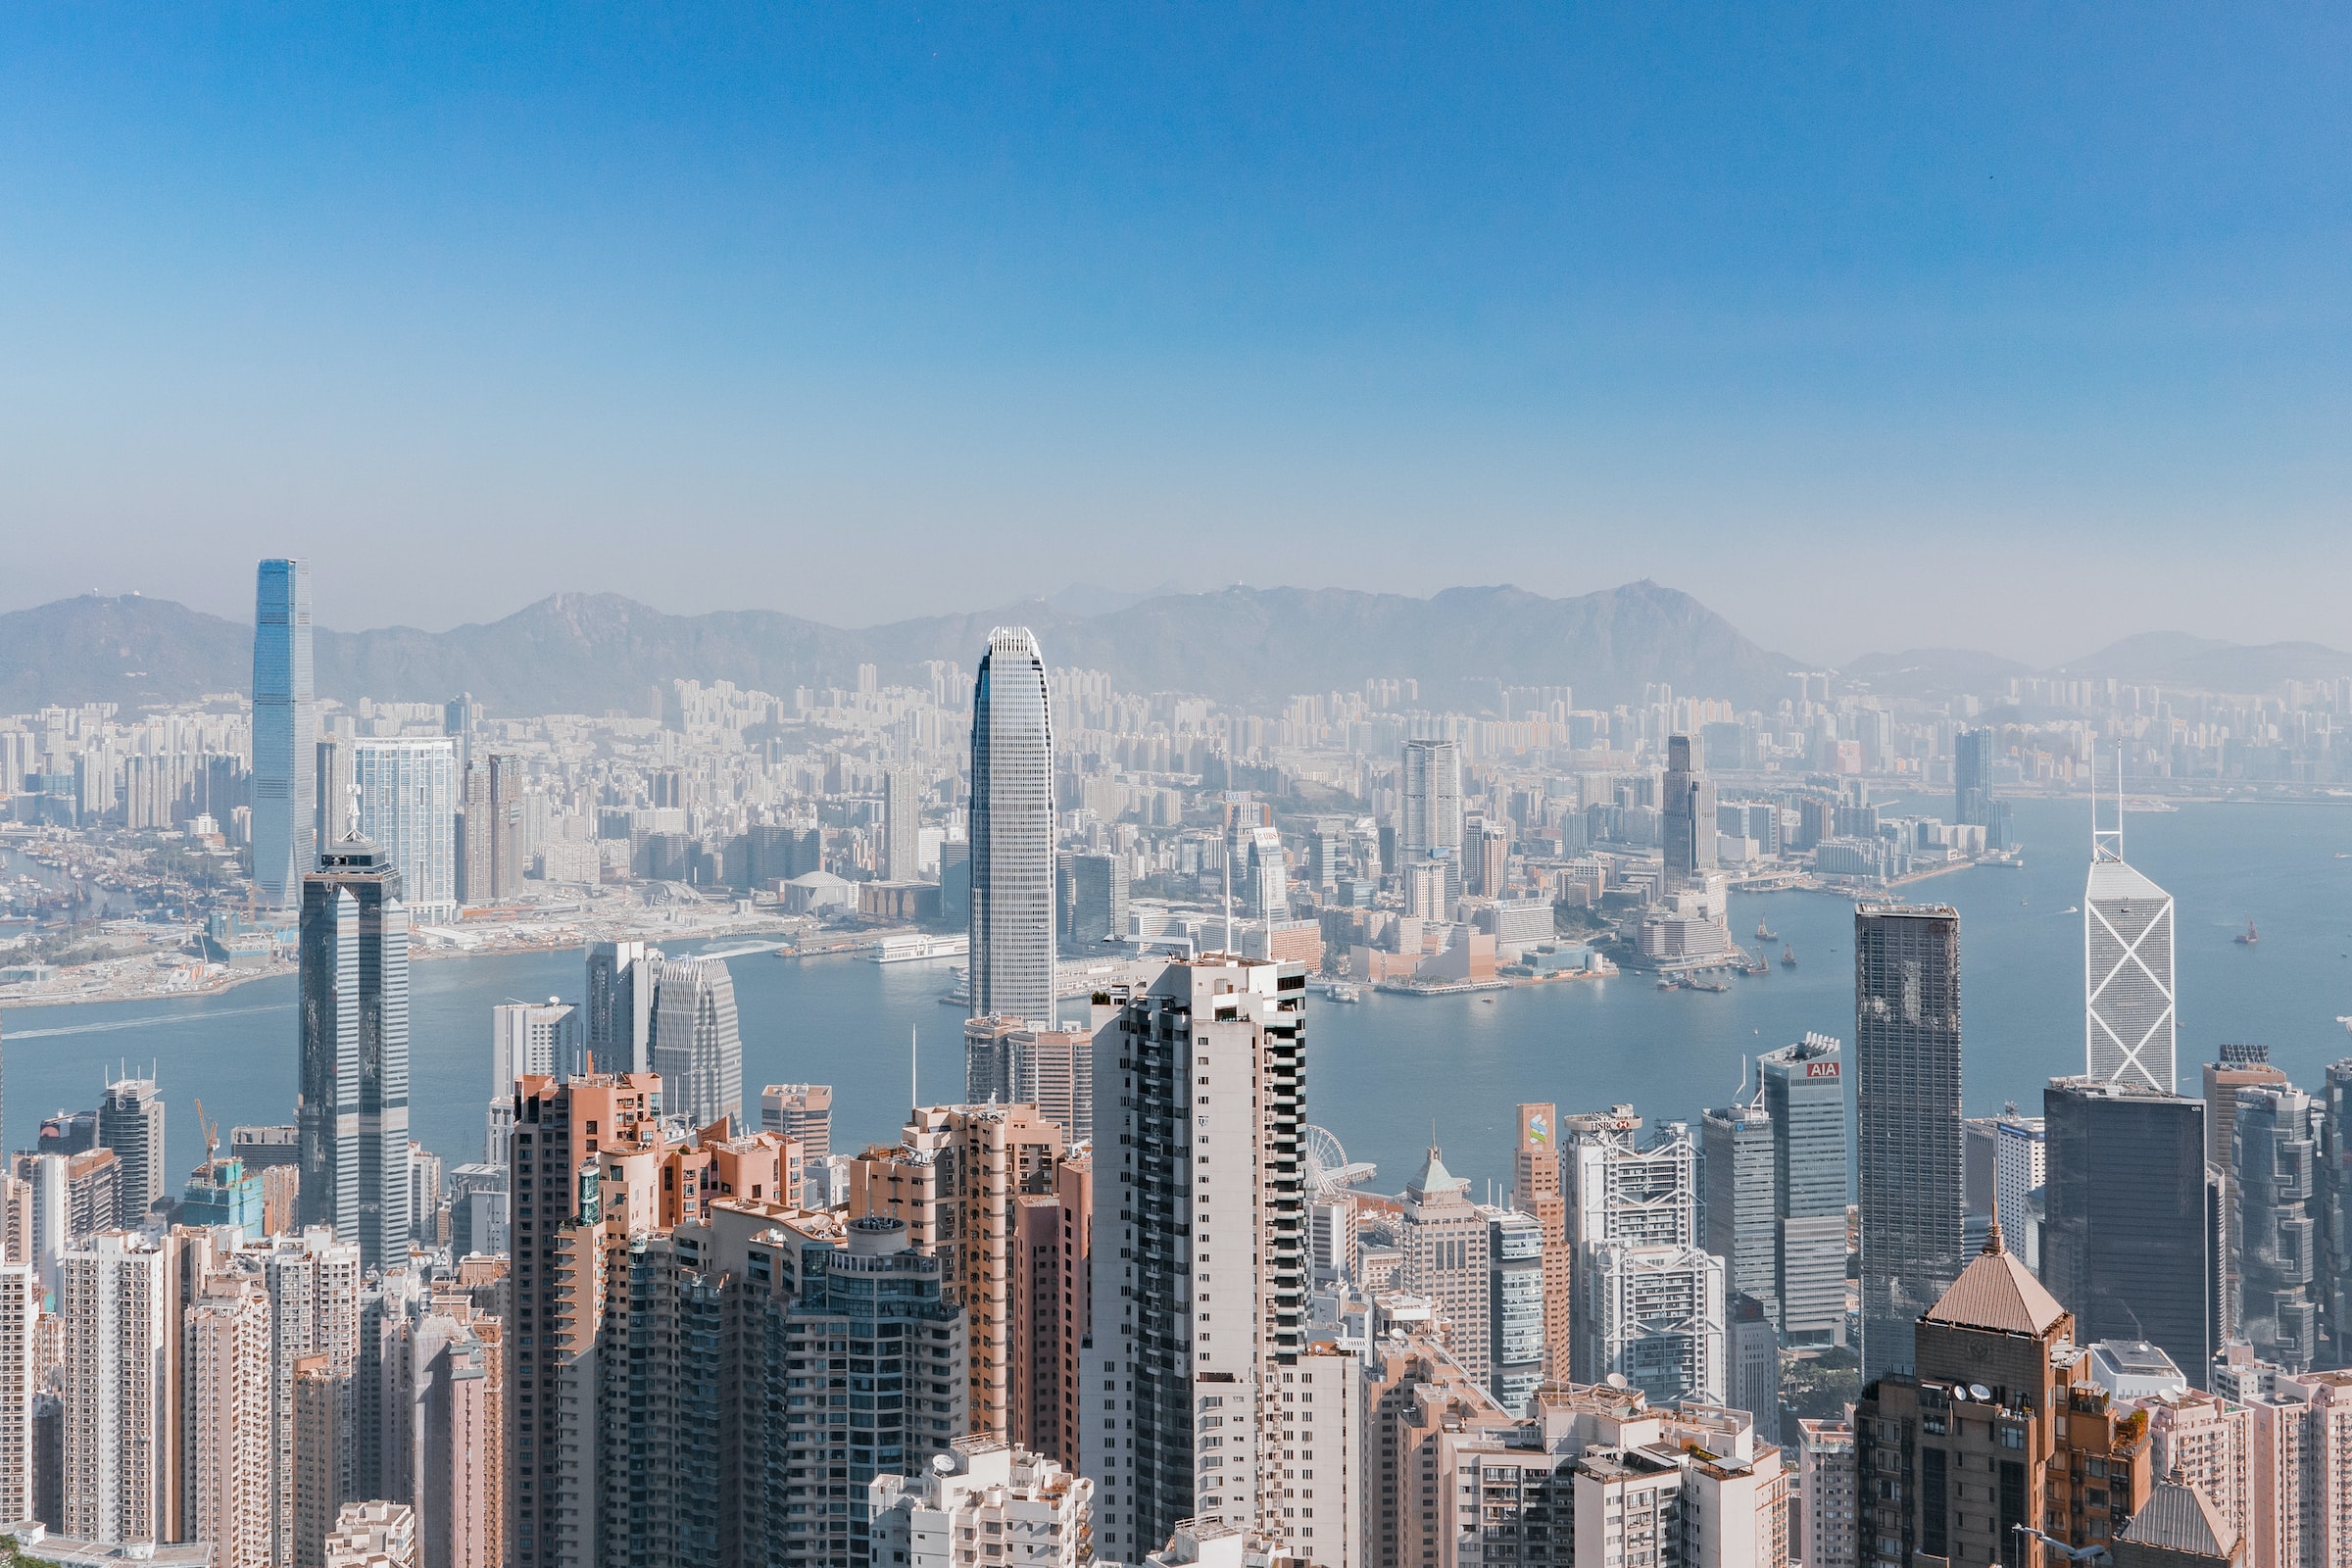 Hong Kong Gears Up for Travel Surge